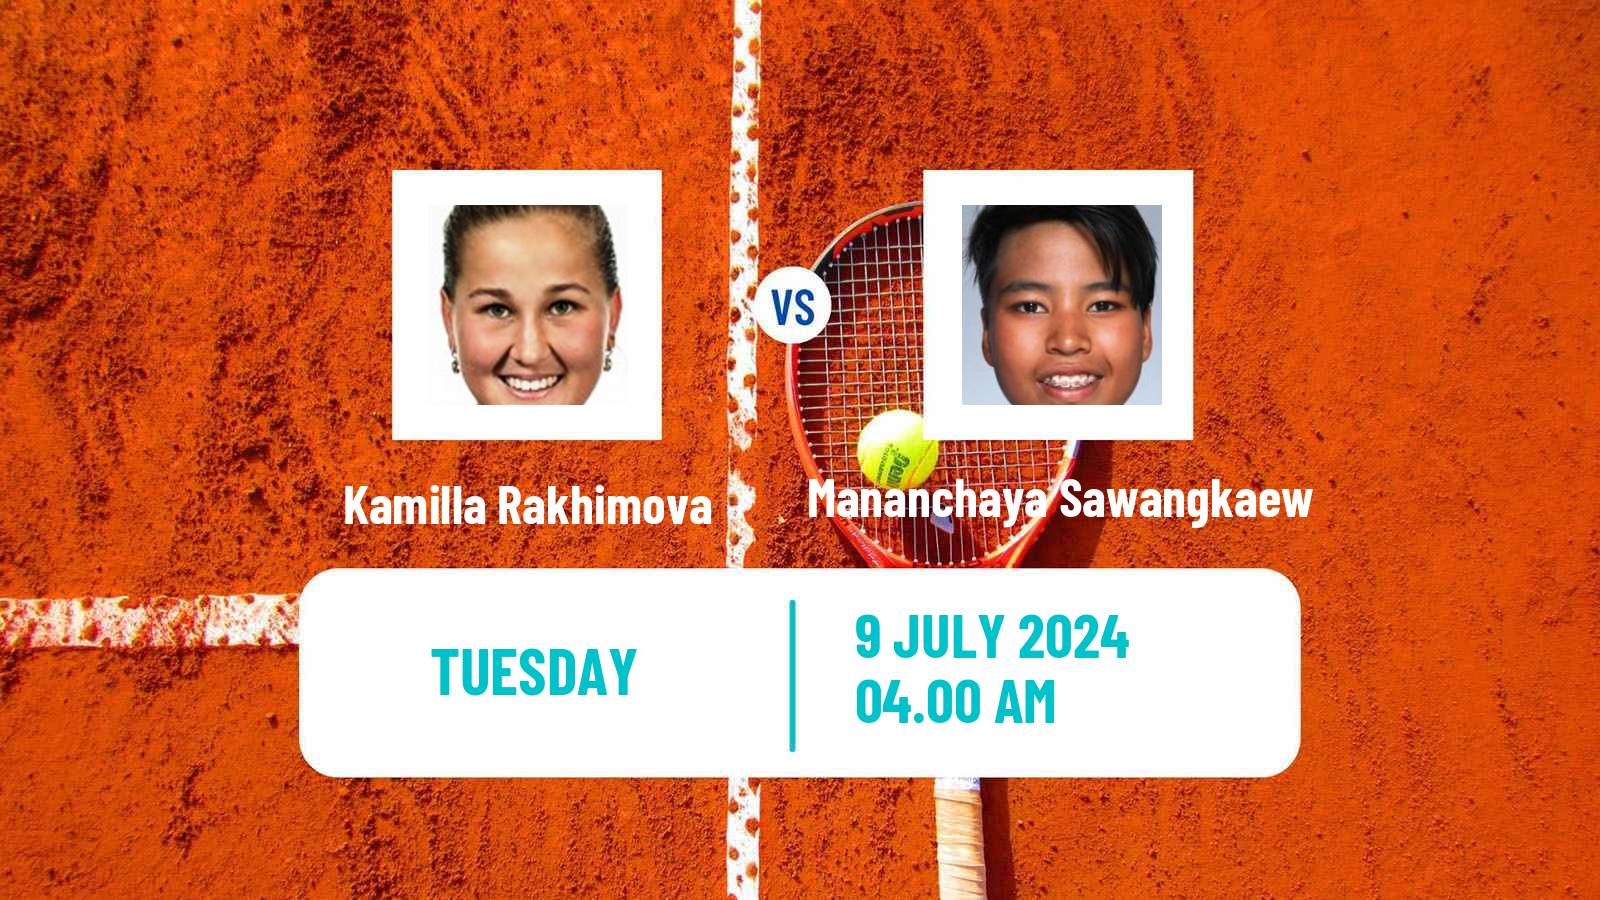 Tennis Bastad Challenger Women Kamilla Rakhimova - Mananchaya Sawangkaew